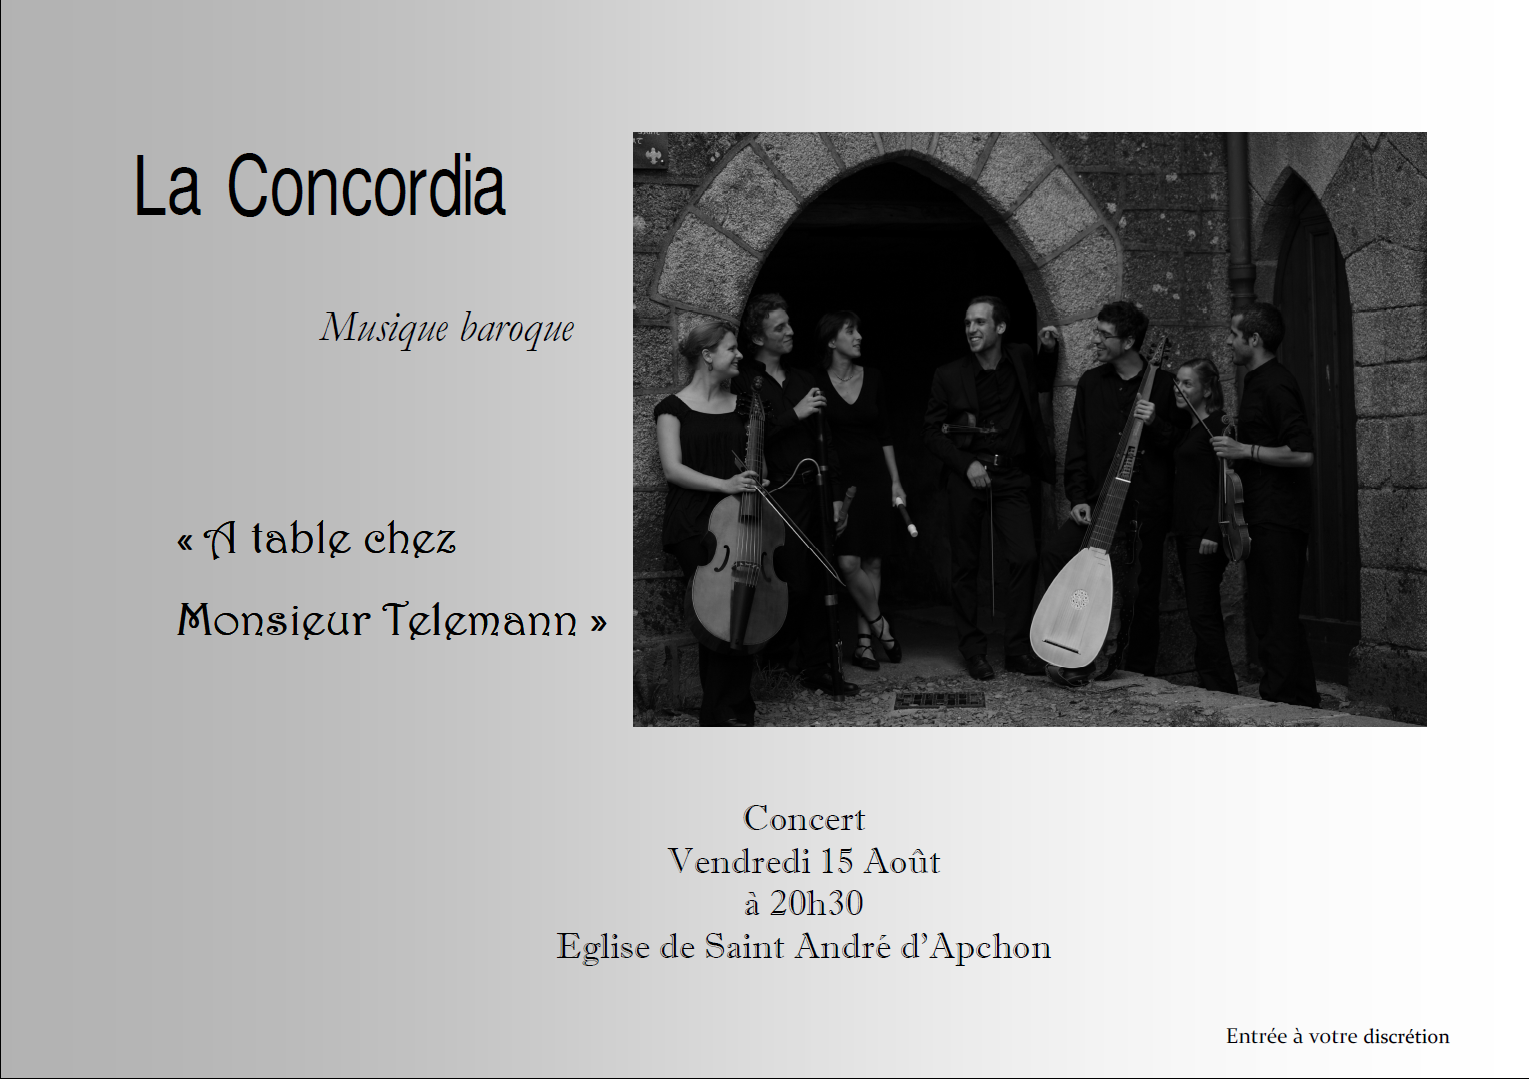 Concert "La Concordia"